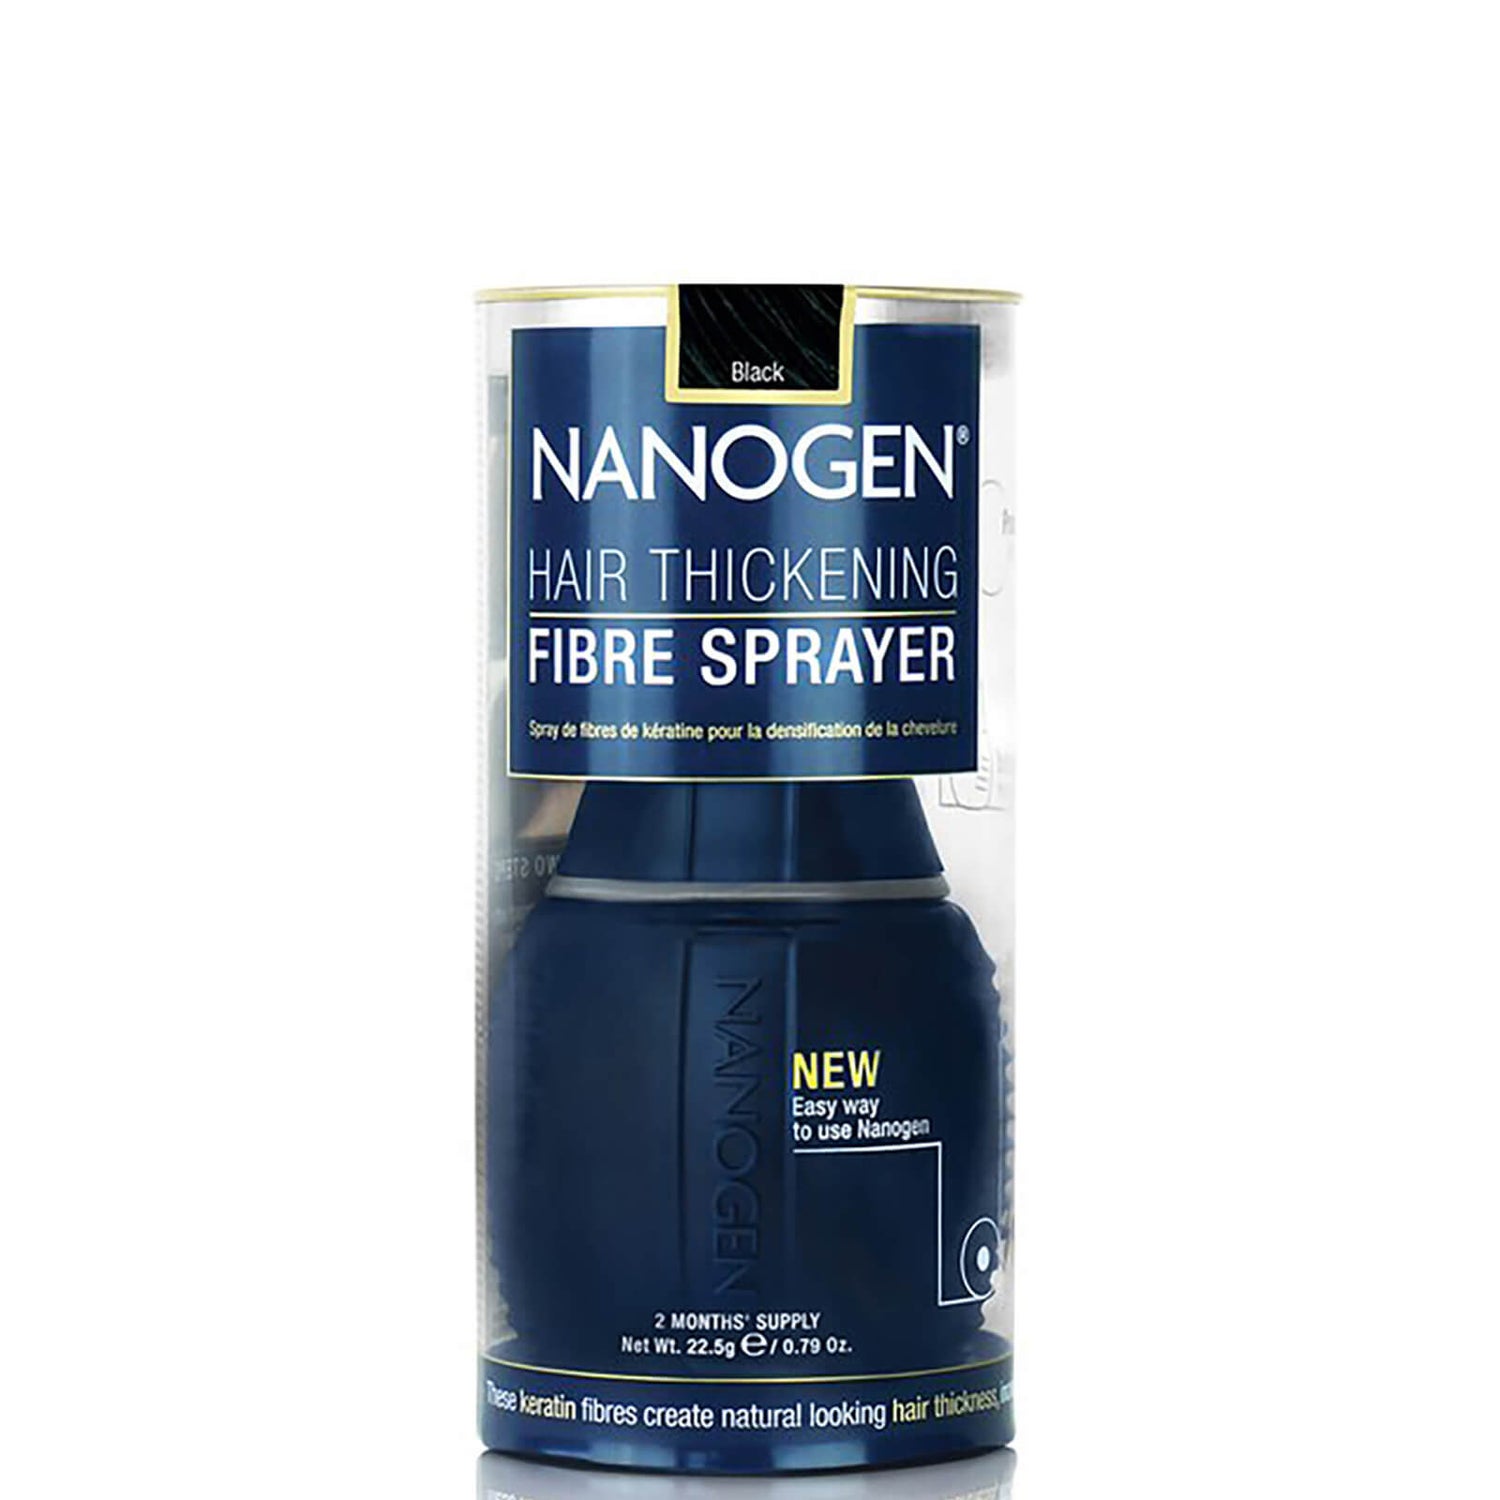 Nanogen Fibre Sprayer Black (22,5 g)